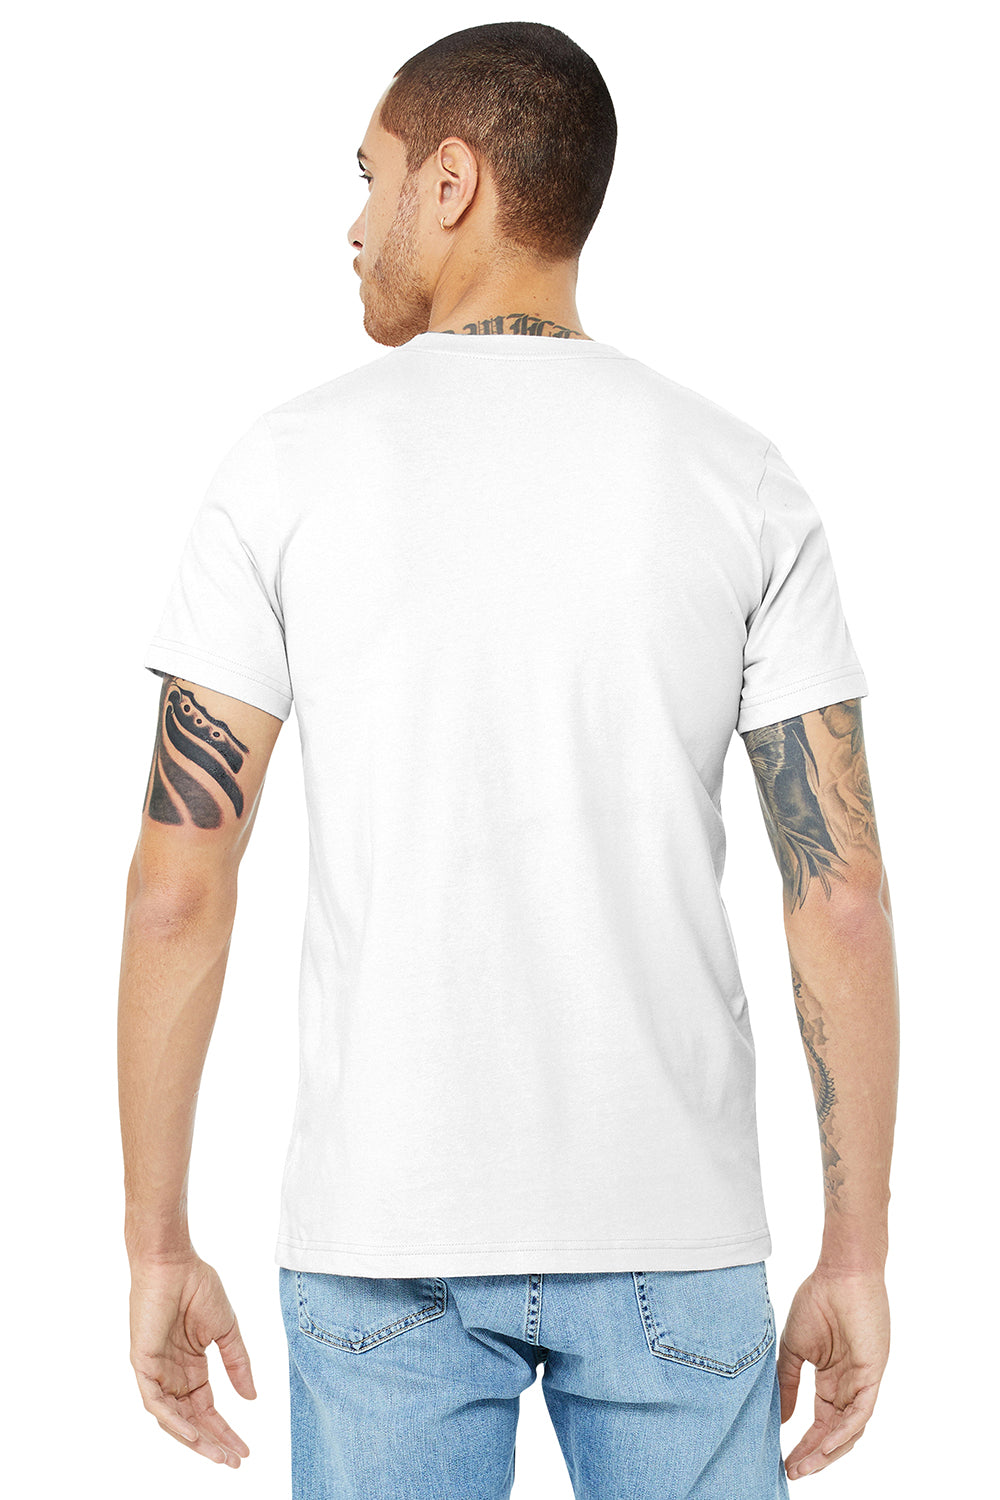 Bella + Canvas BC3001/3001C Mens Jersey Short Sleeve Crewneck T-Shirt White Model Back